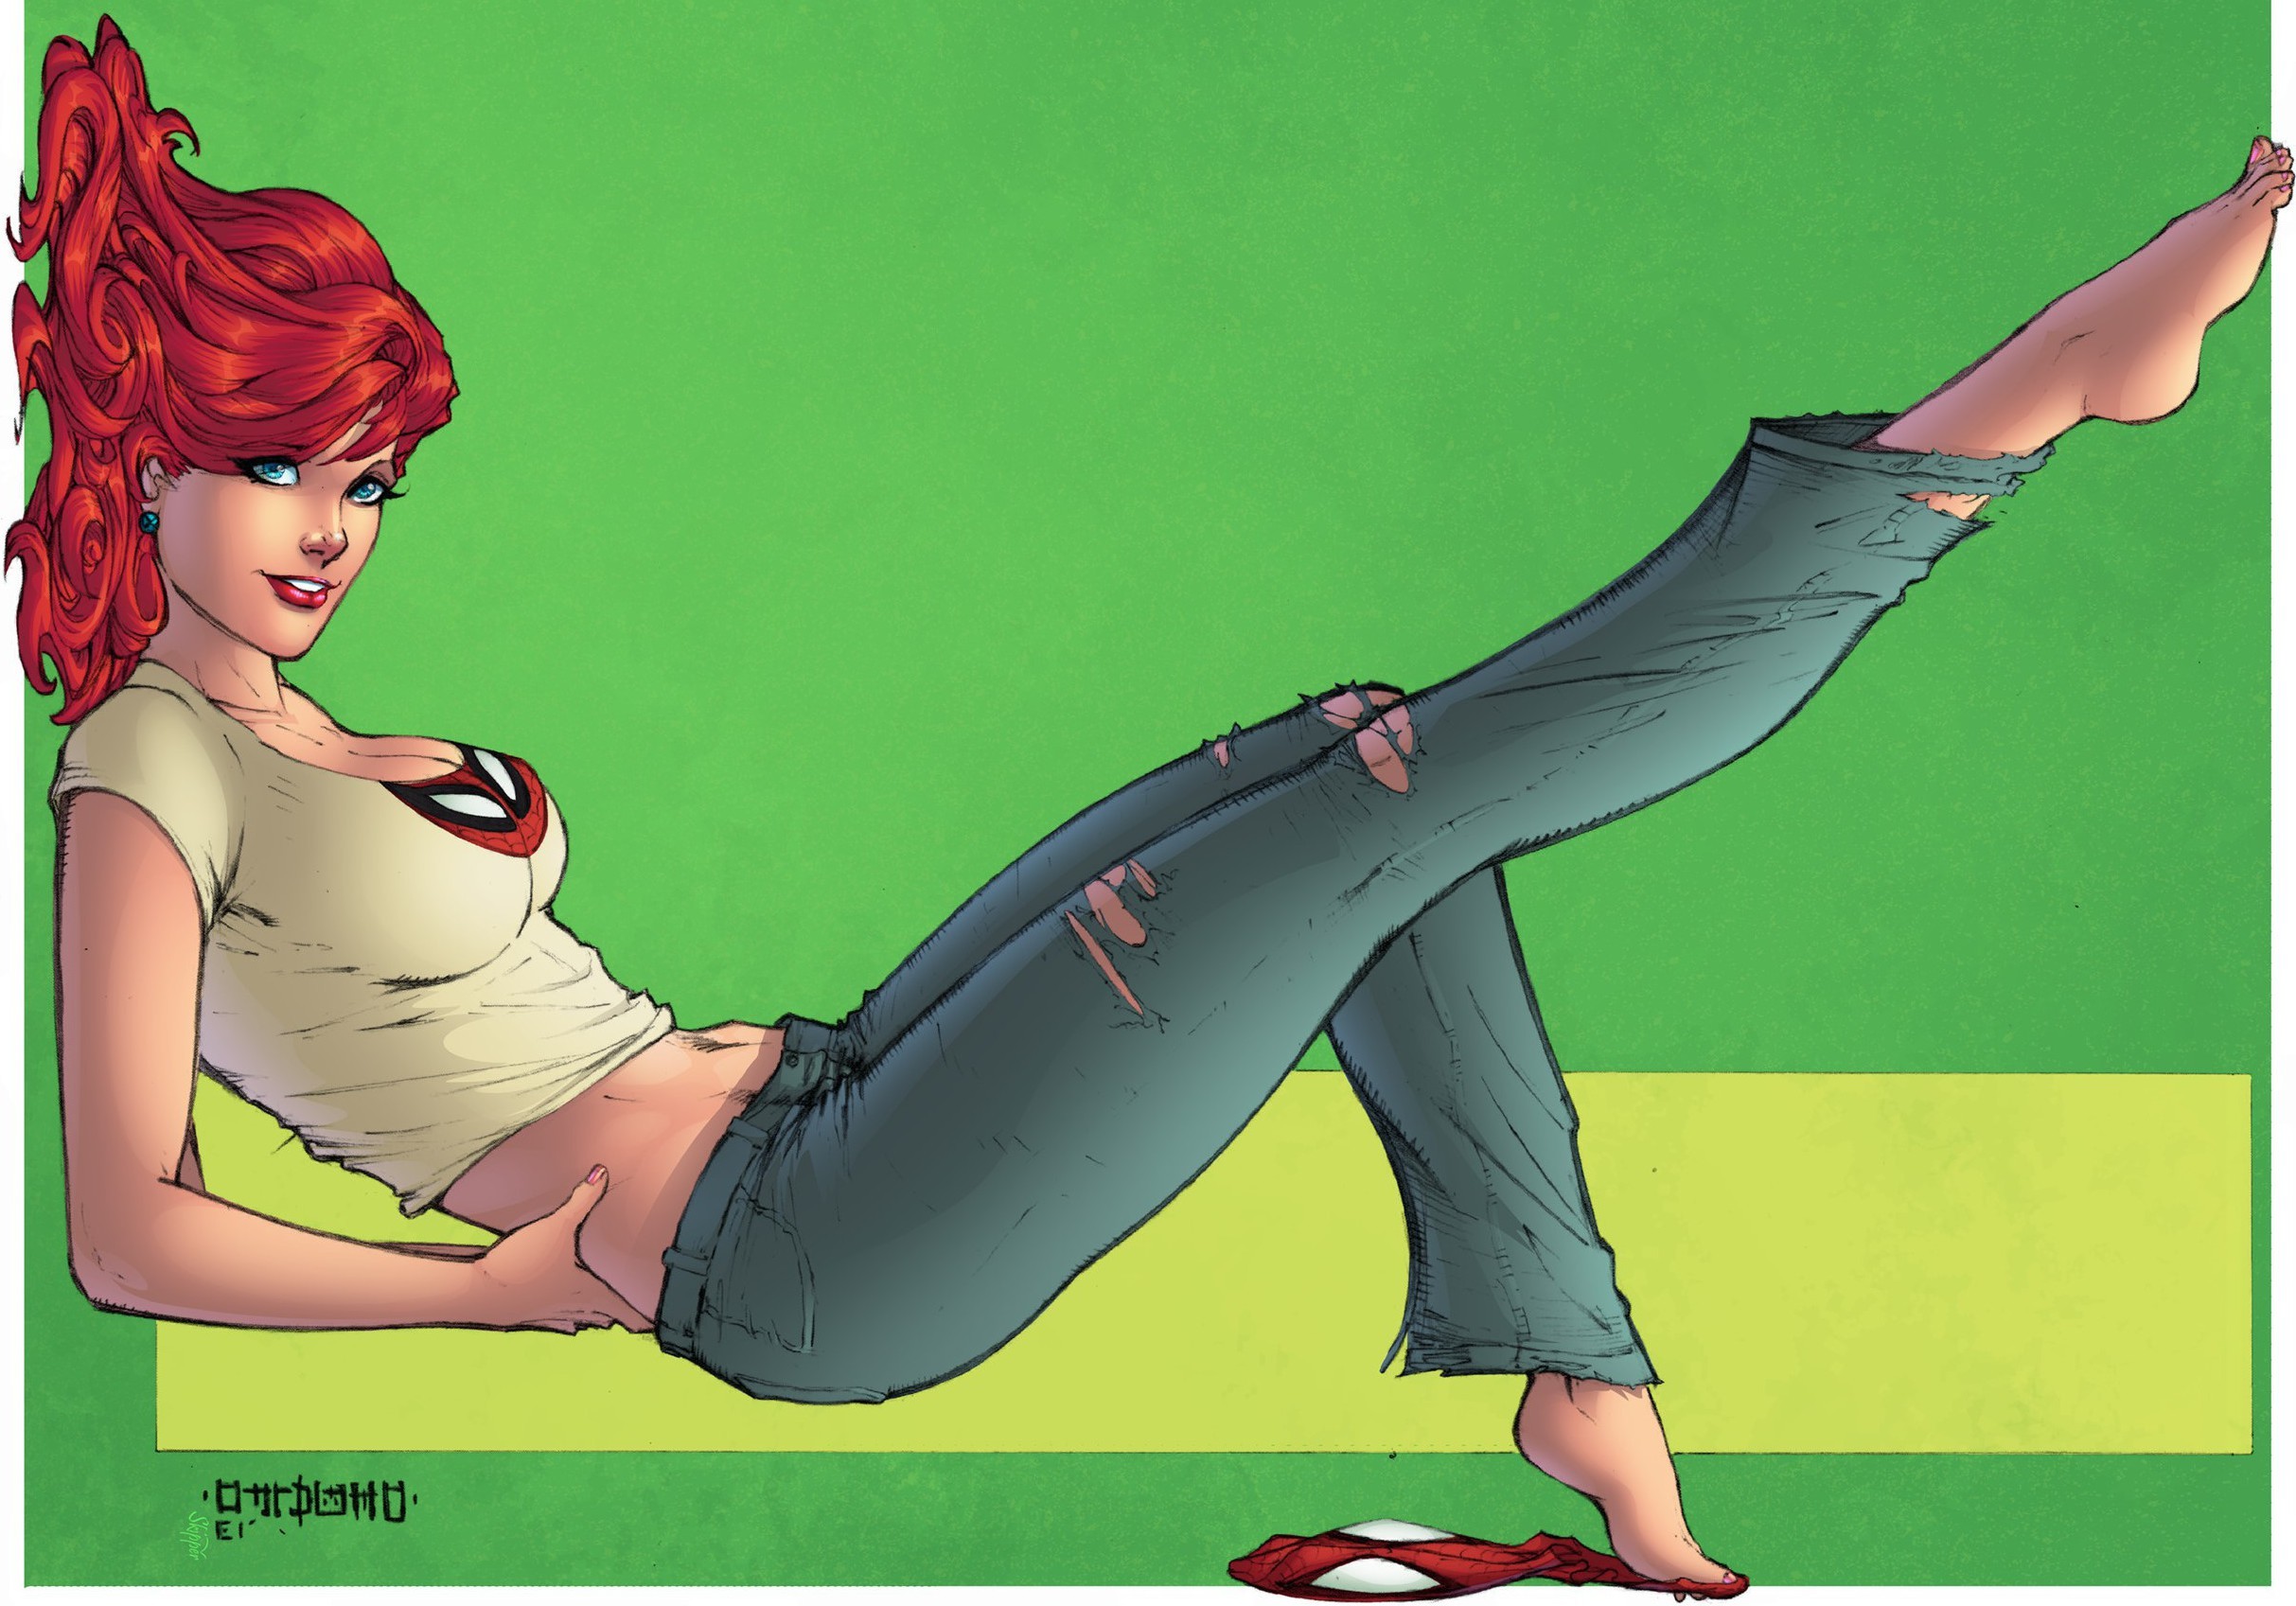 comics, mary jane watson, barefoot, red hair